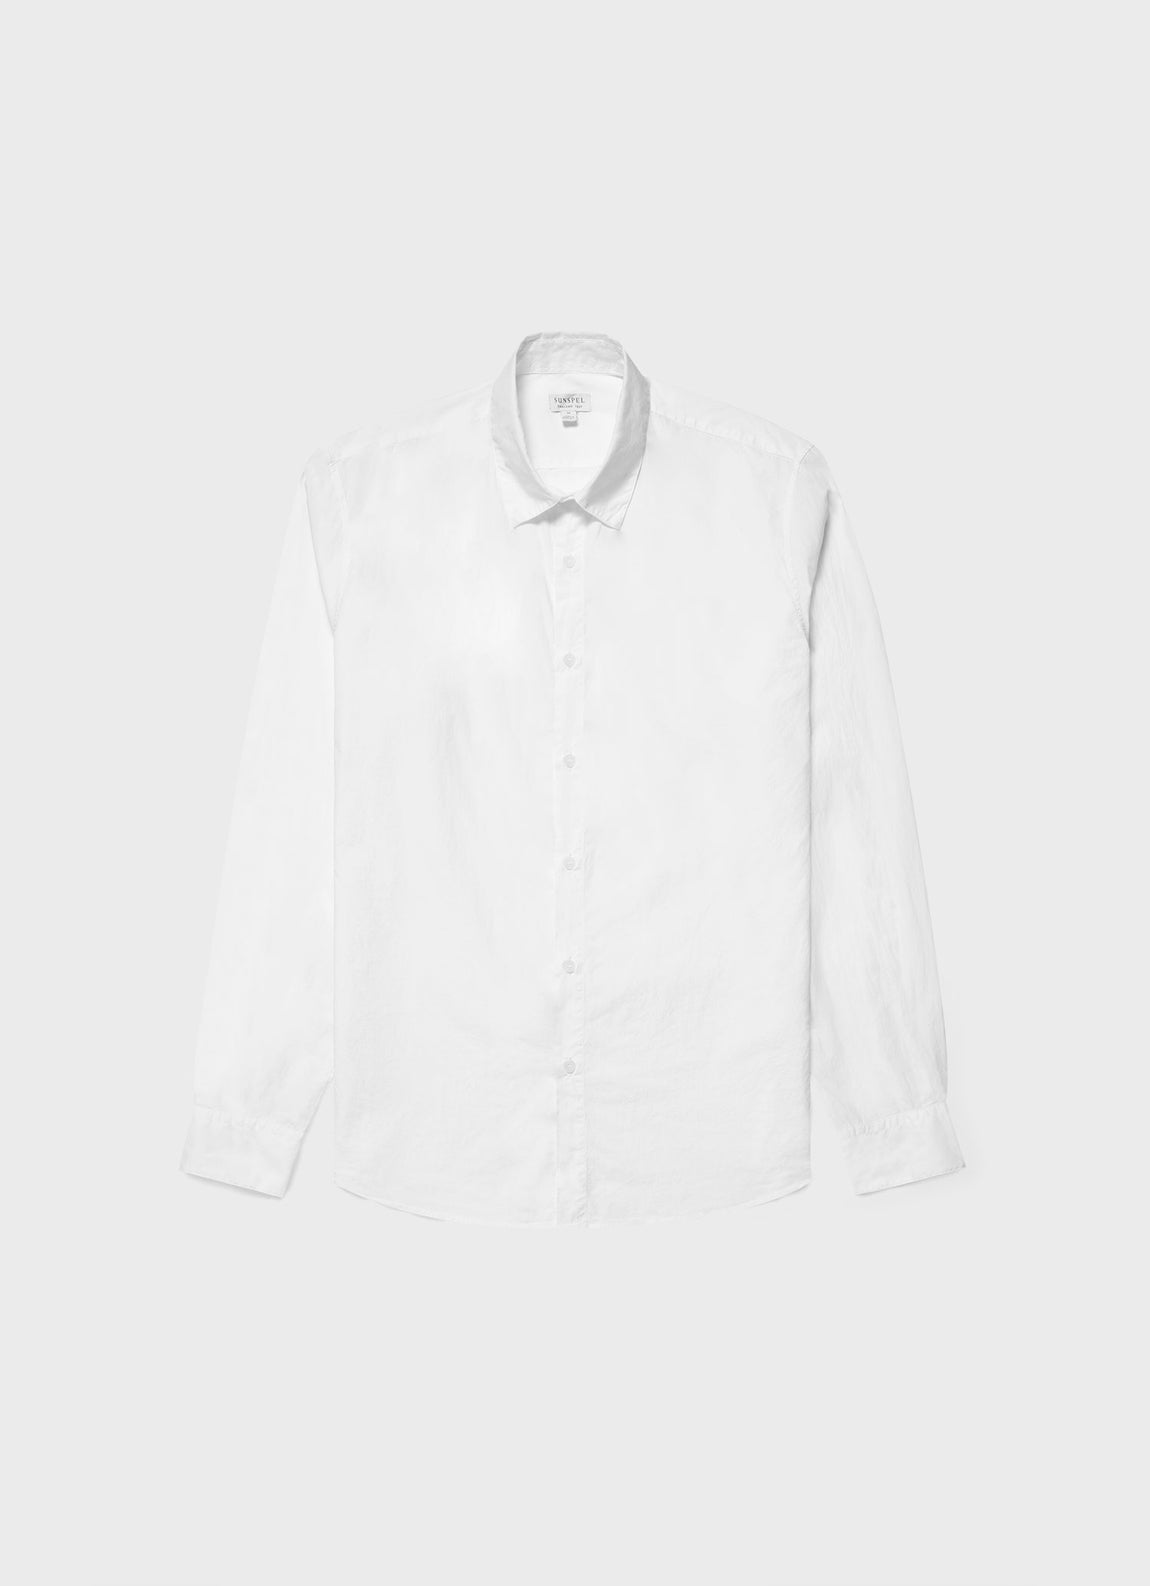 Men's Lightweight Poplin Shirt in White